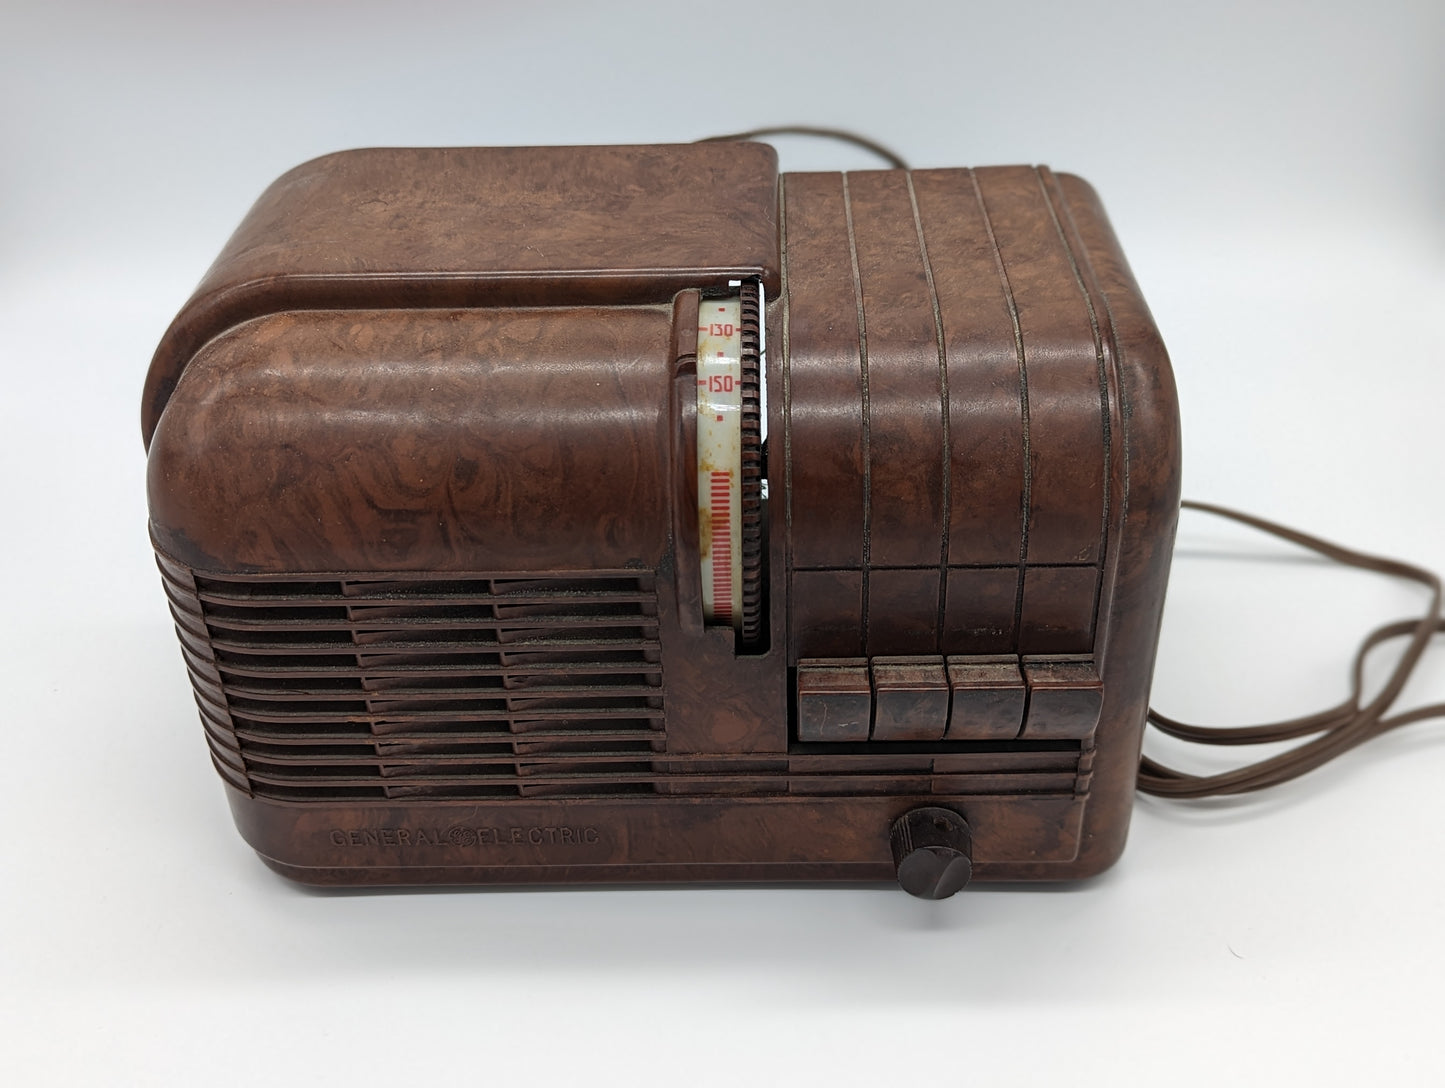 General Electric Radios (1935-1939)